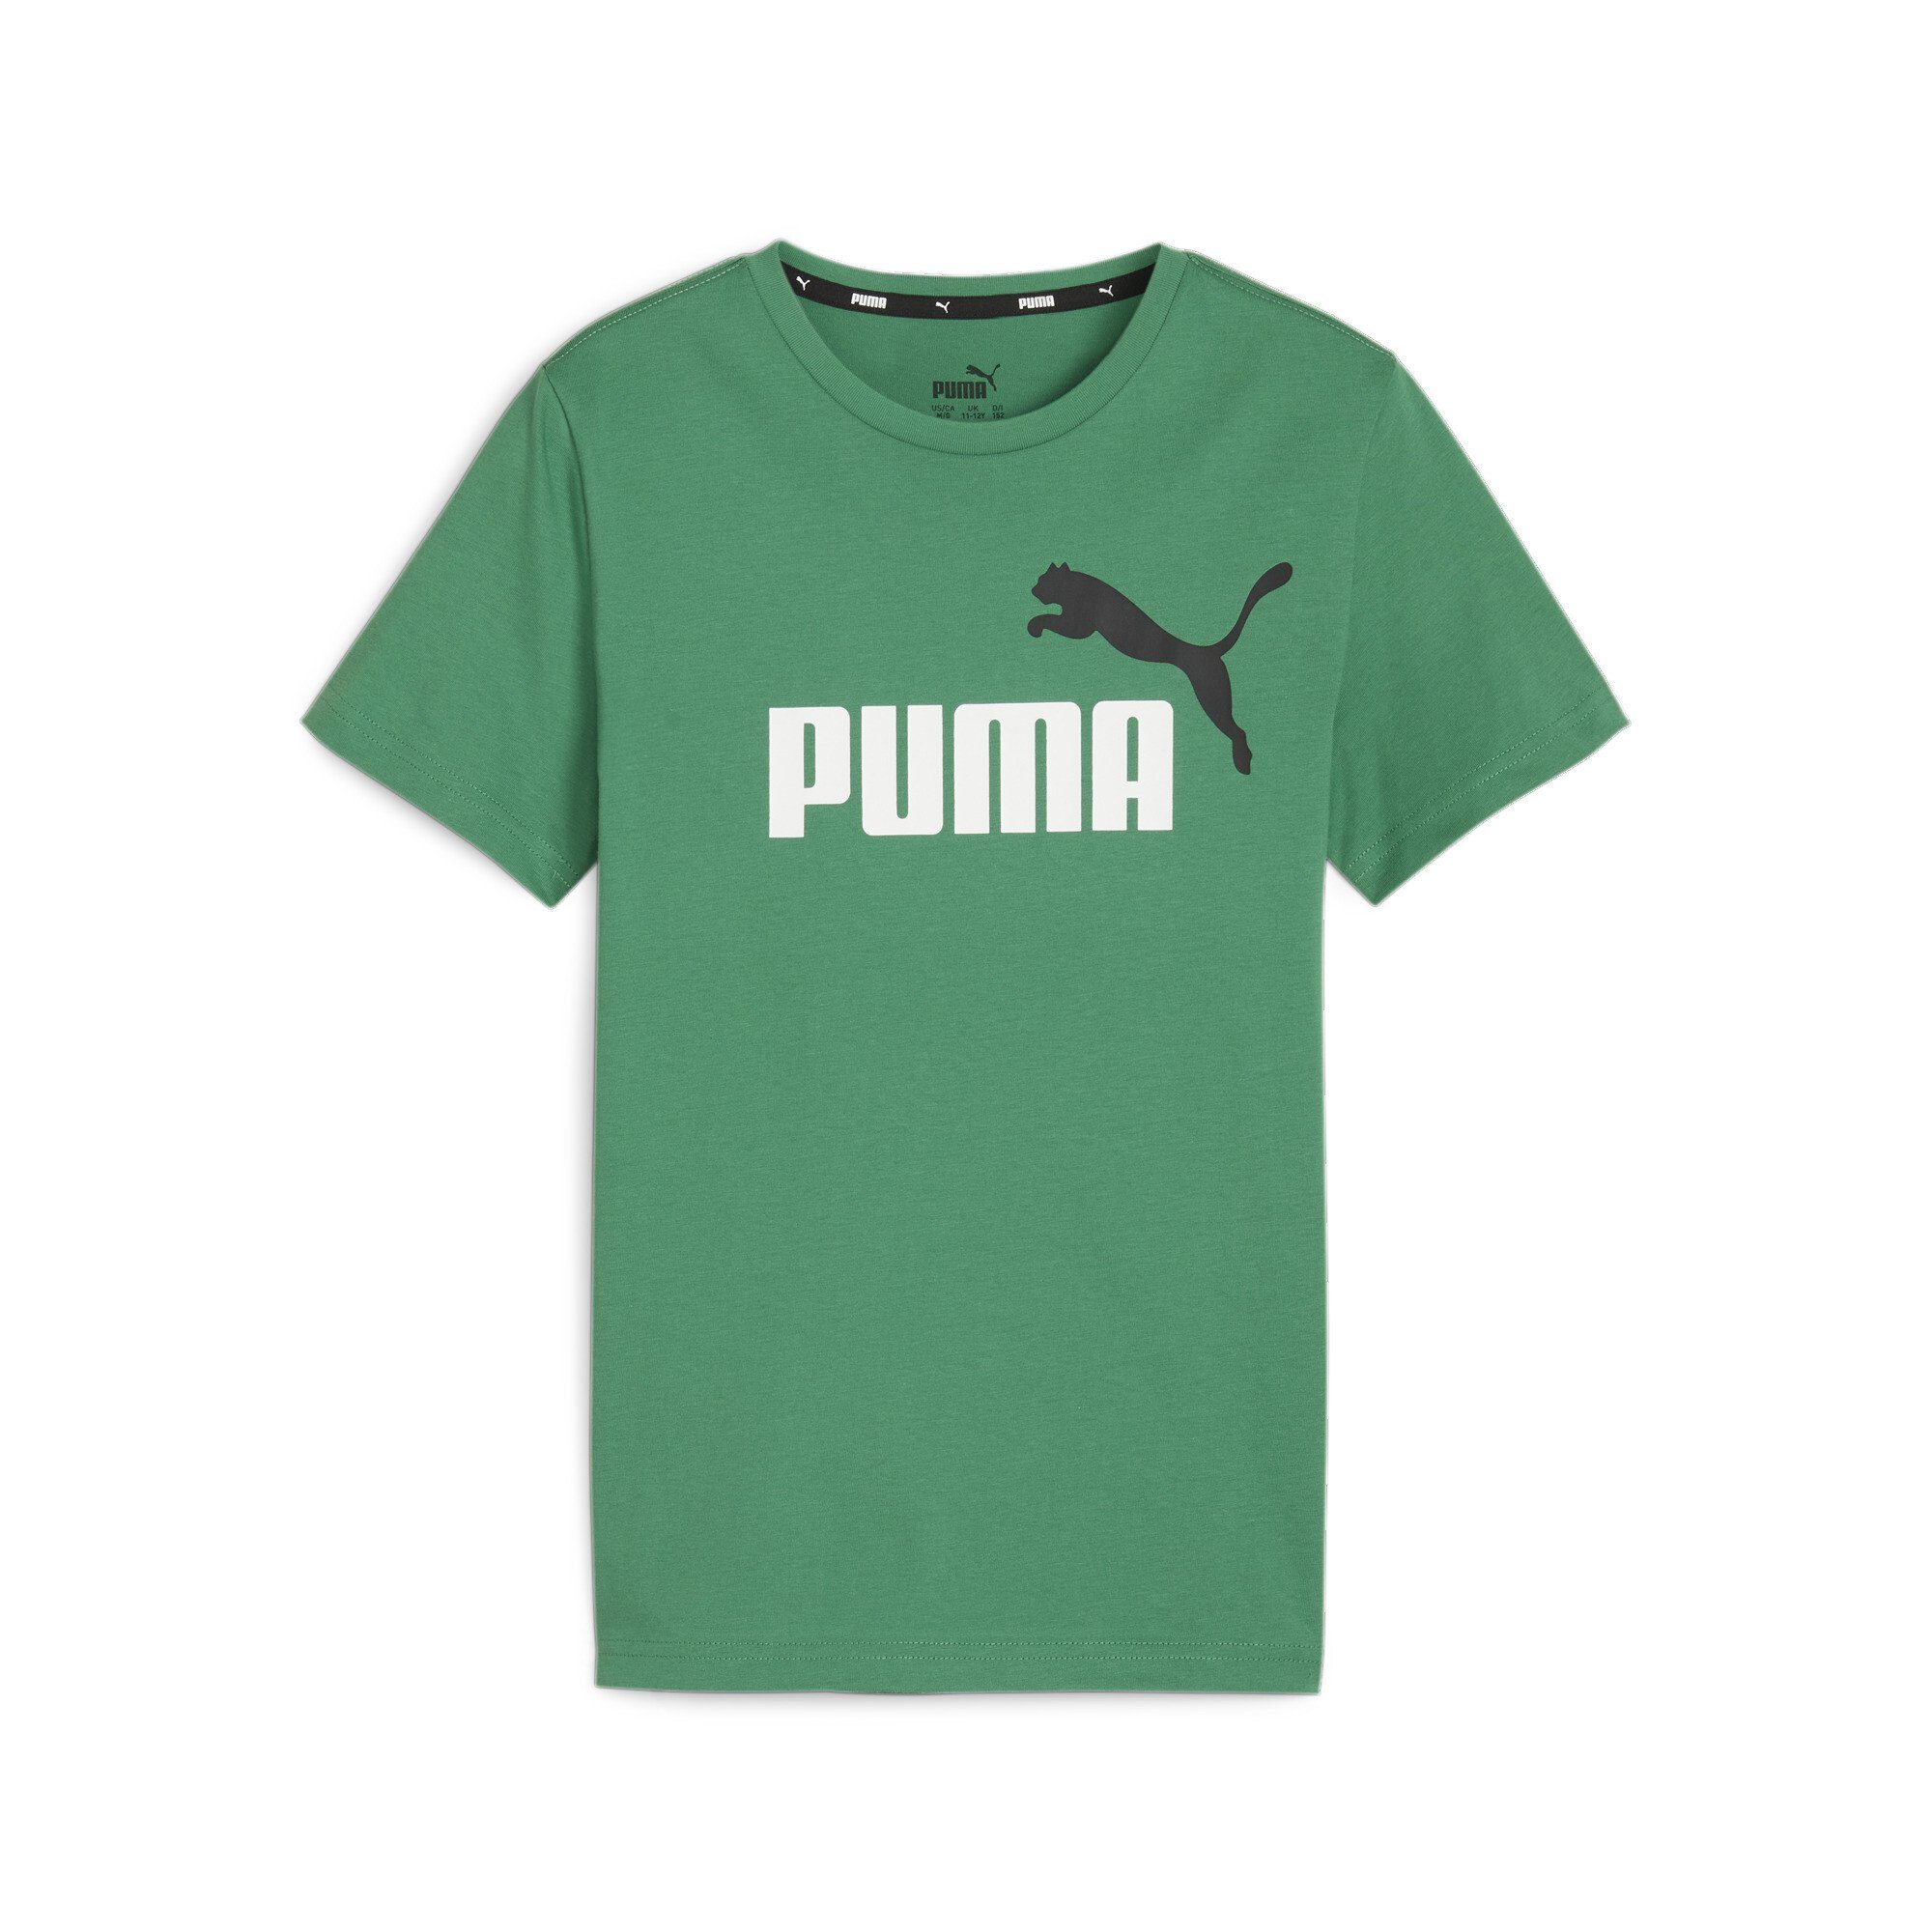 Puma T-shirt groen Katoen Ronde hals Logo 128